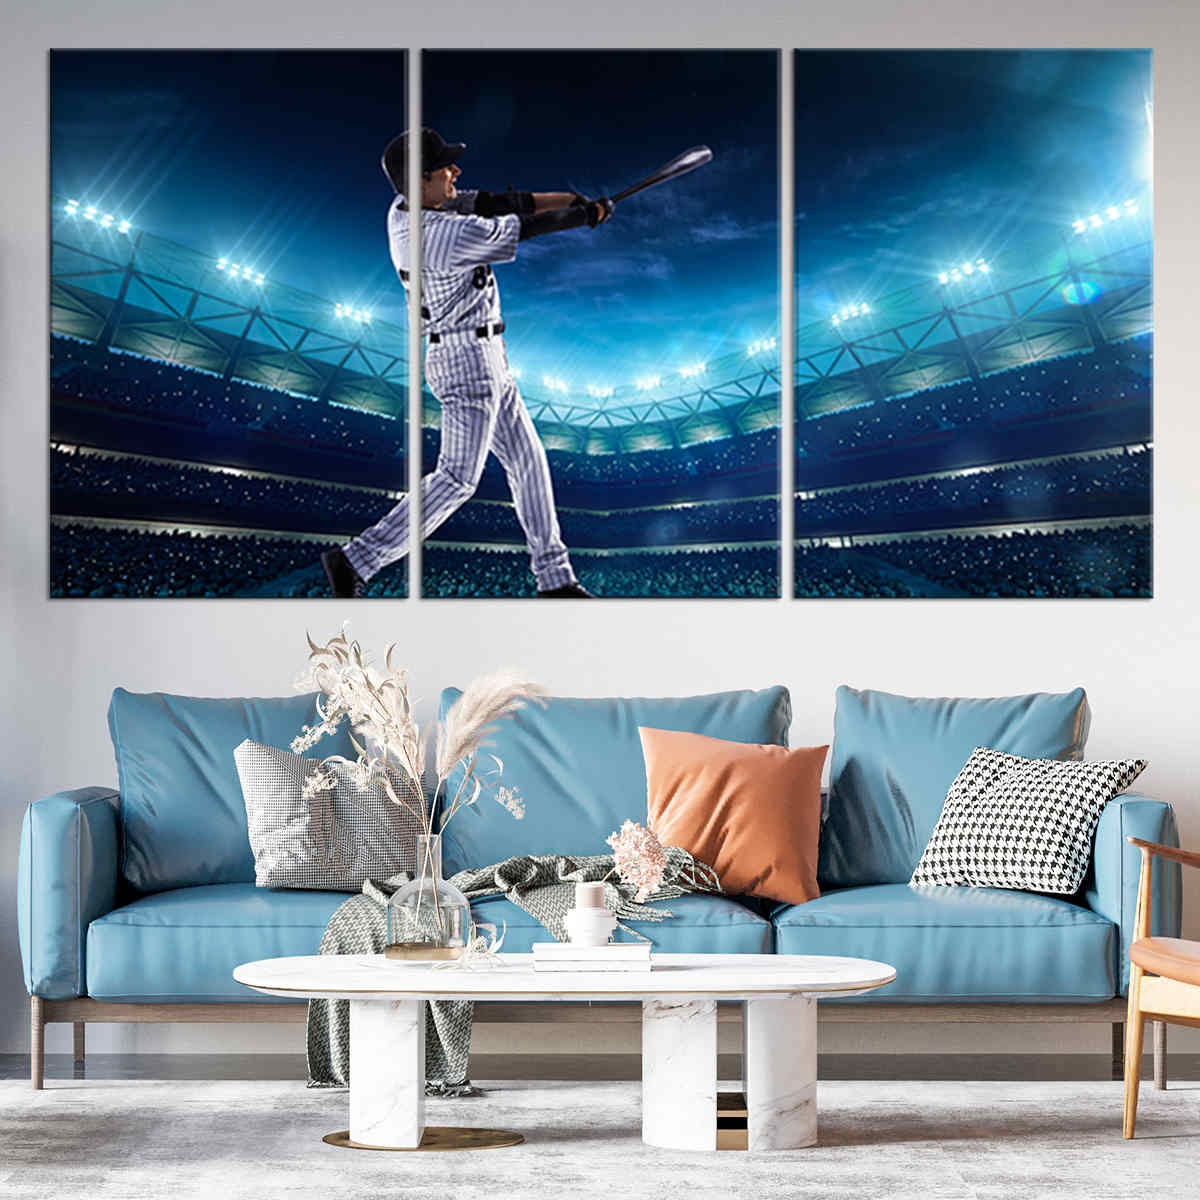 Professional Baseball Player Canvas Wall Art